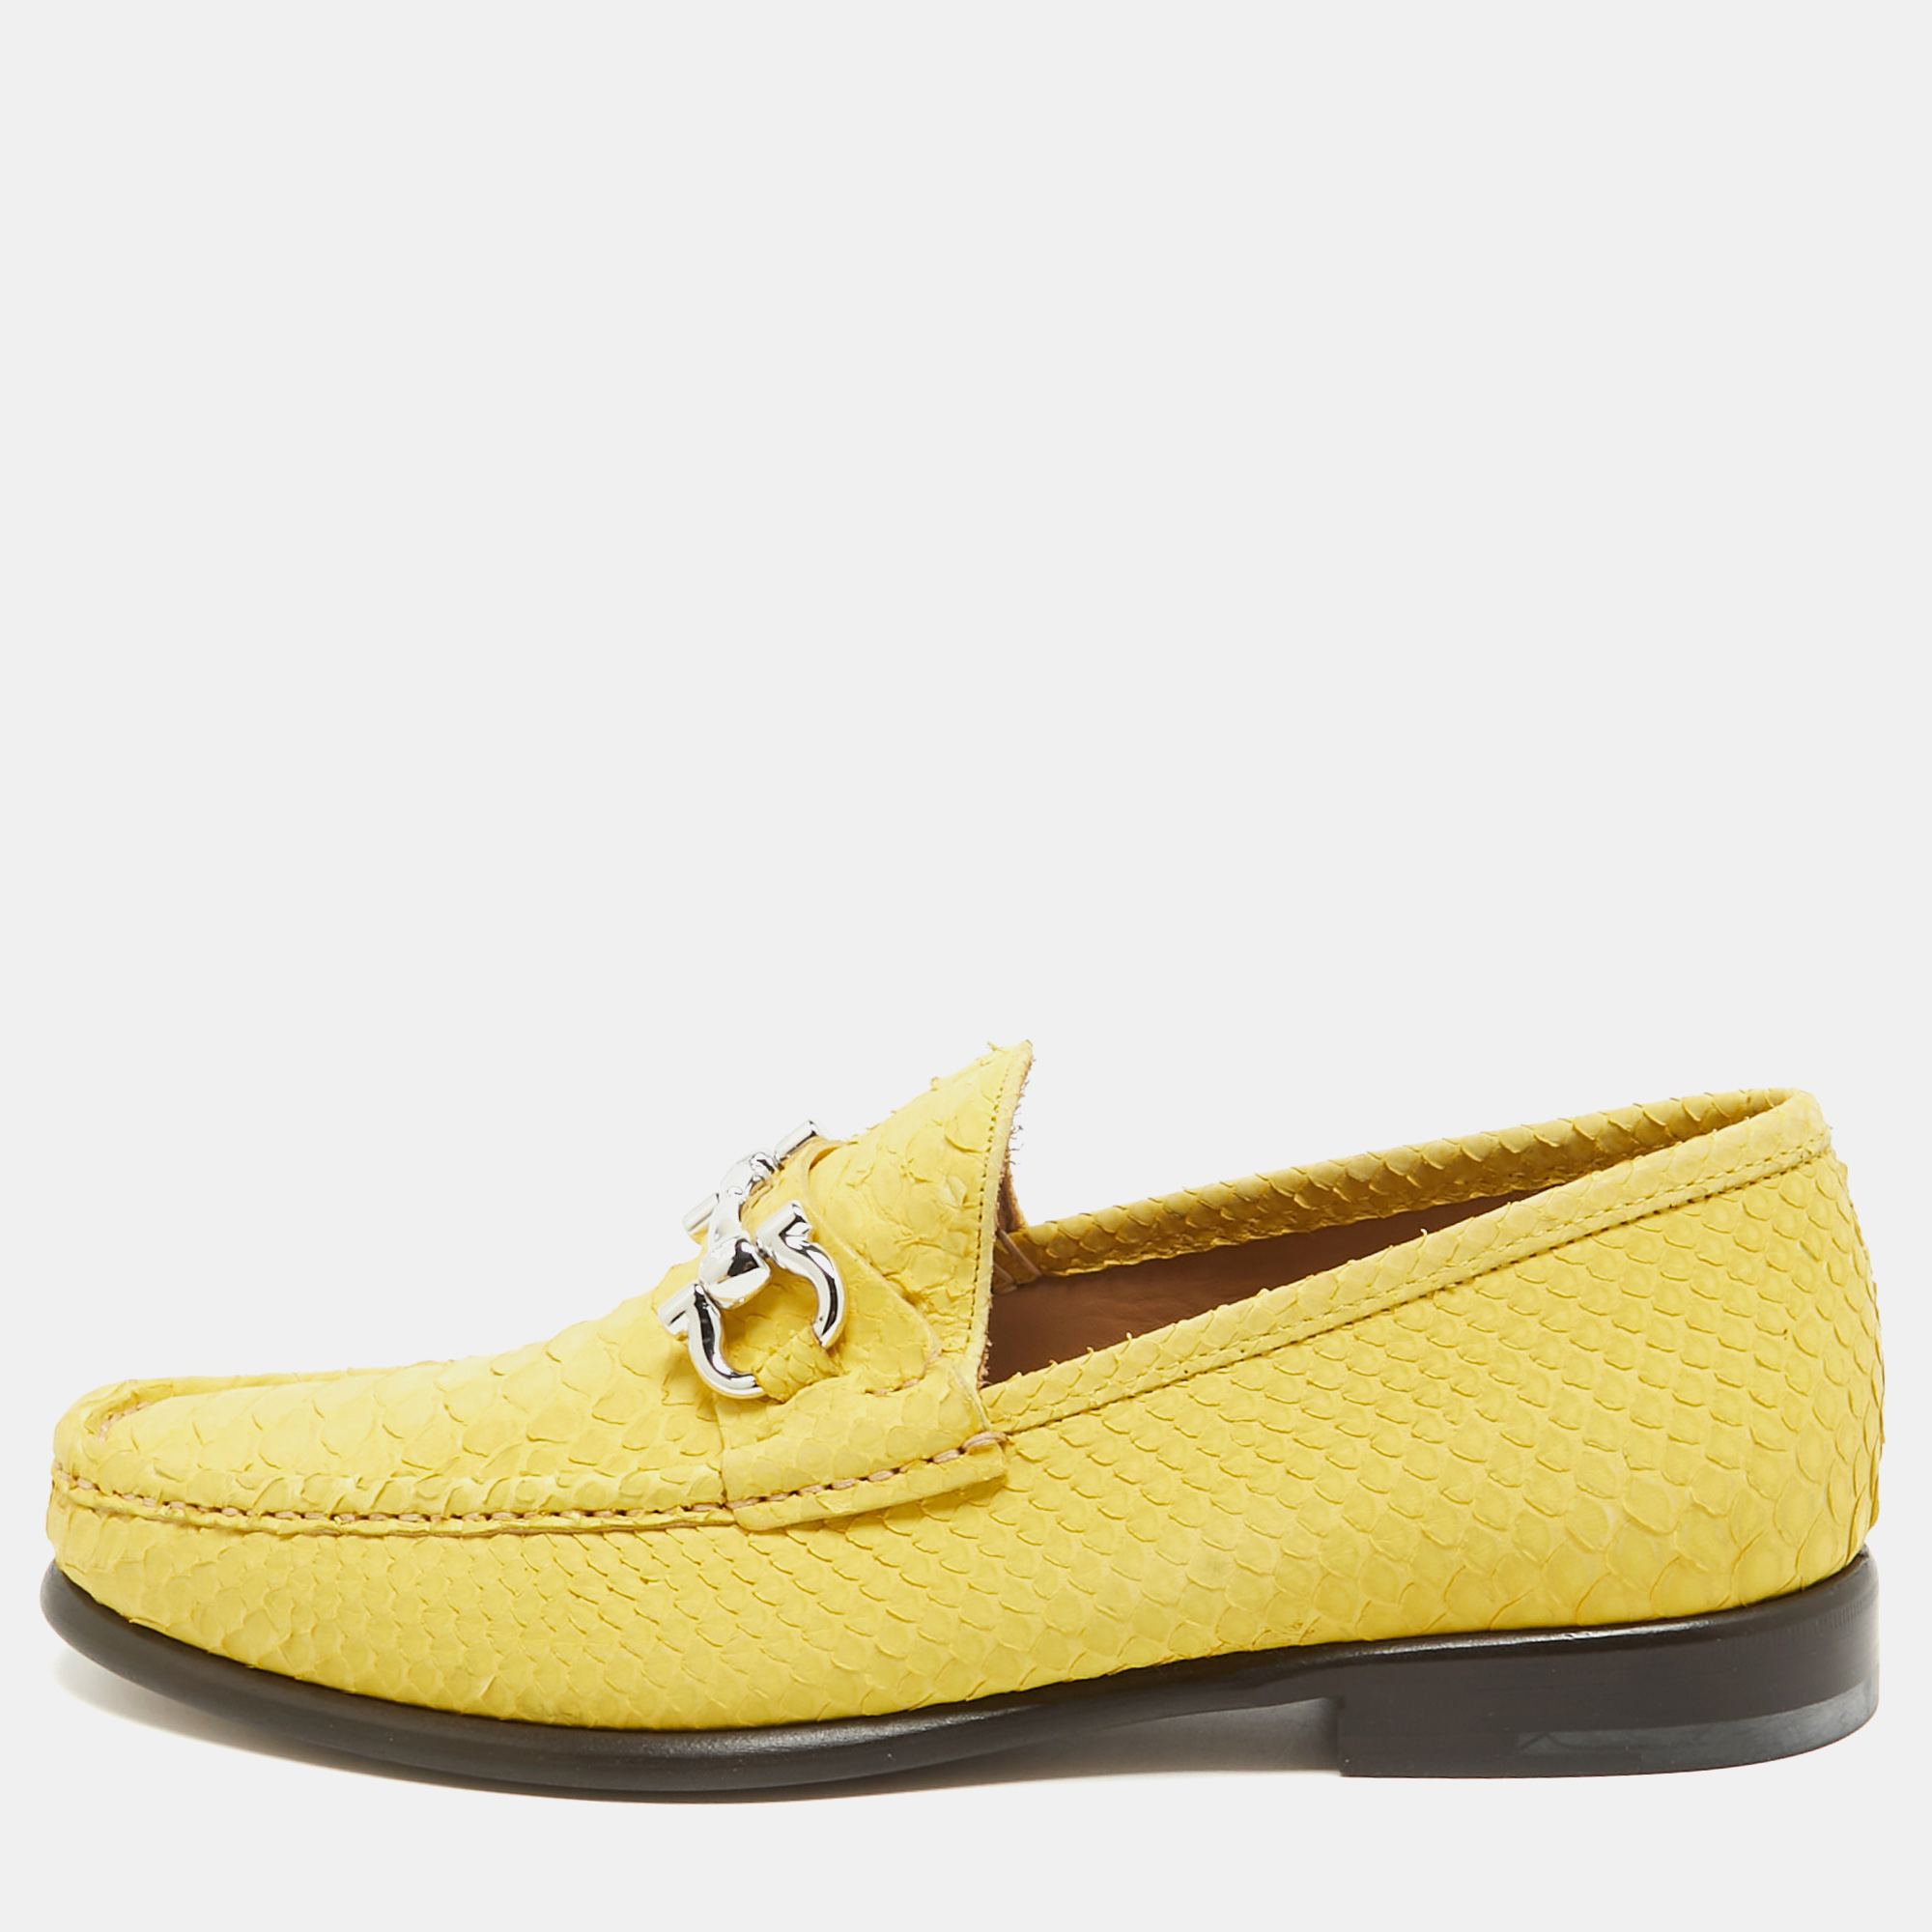 Salvatore ferragamo yellow python mason loafers size 41.5